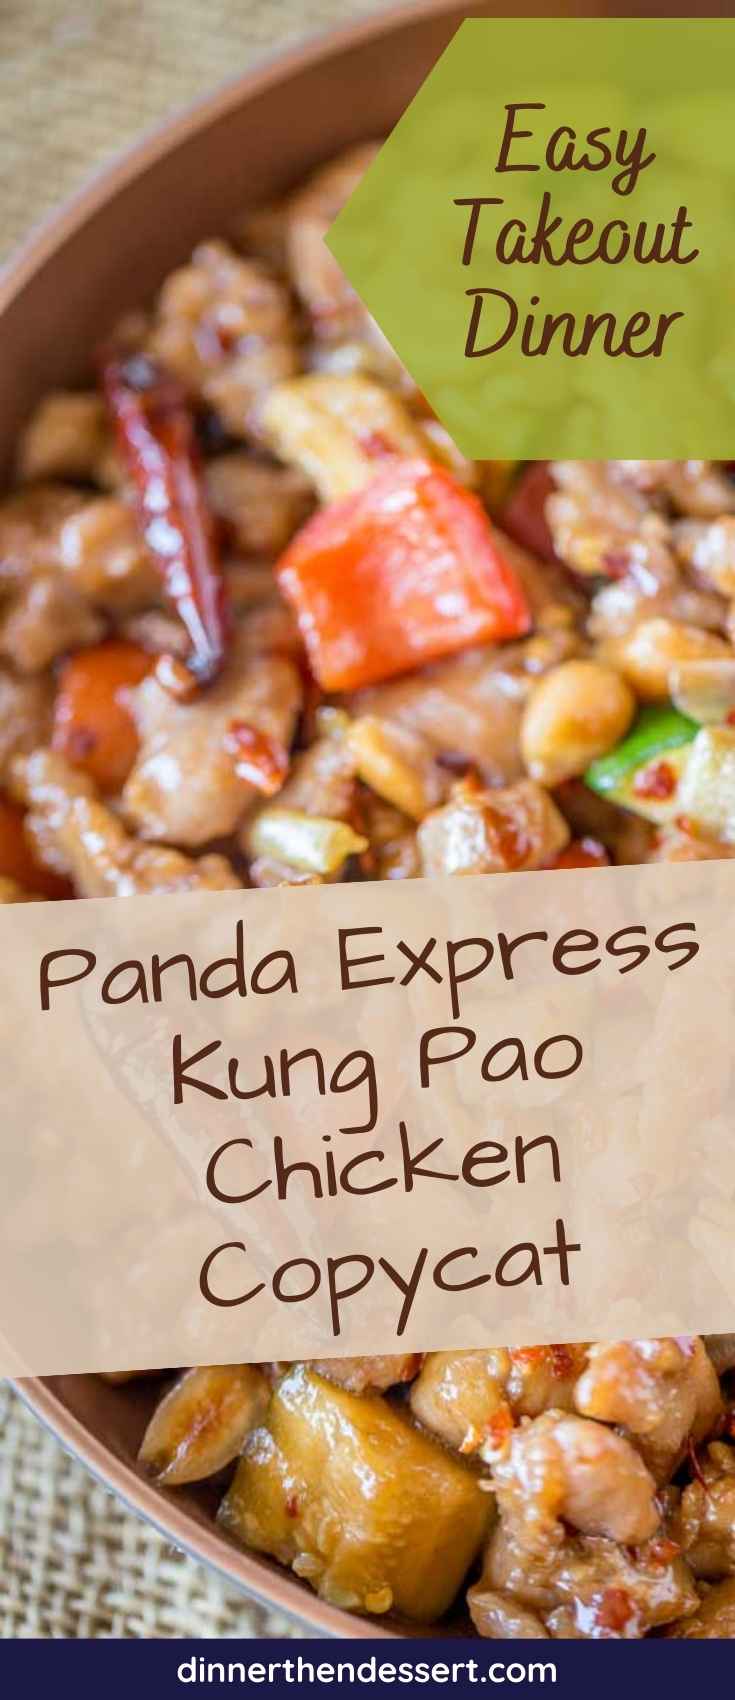 Panda Express Kung Pao Chicken Copycat Recipe